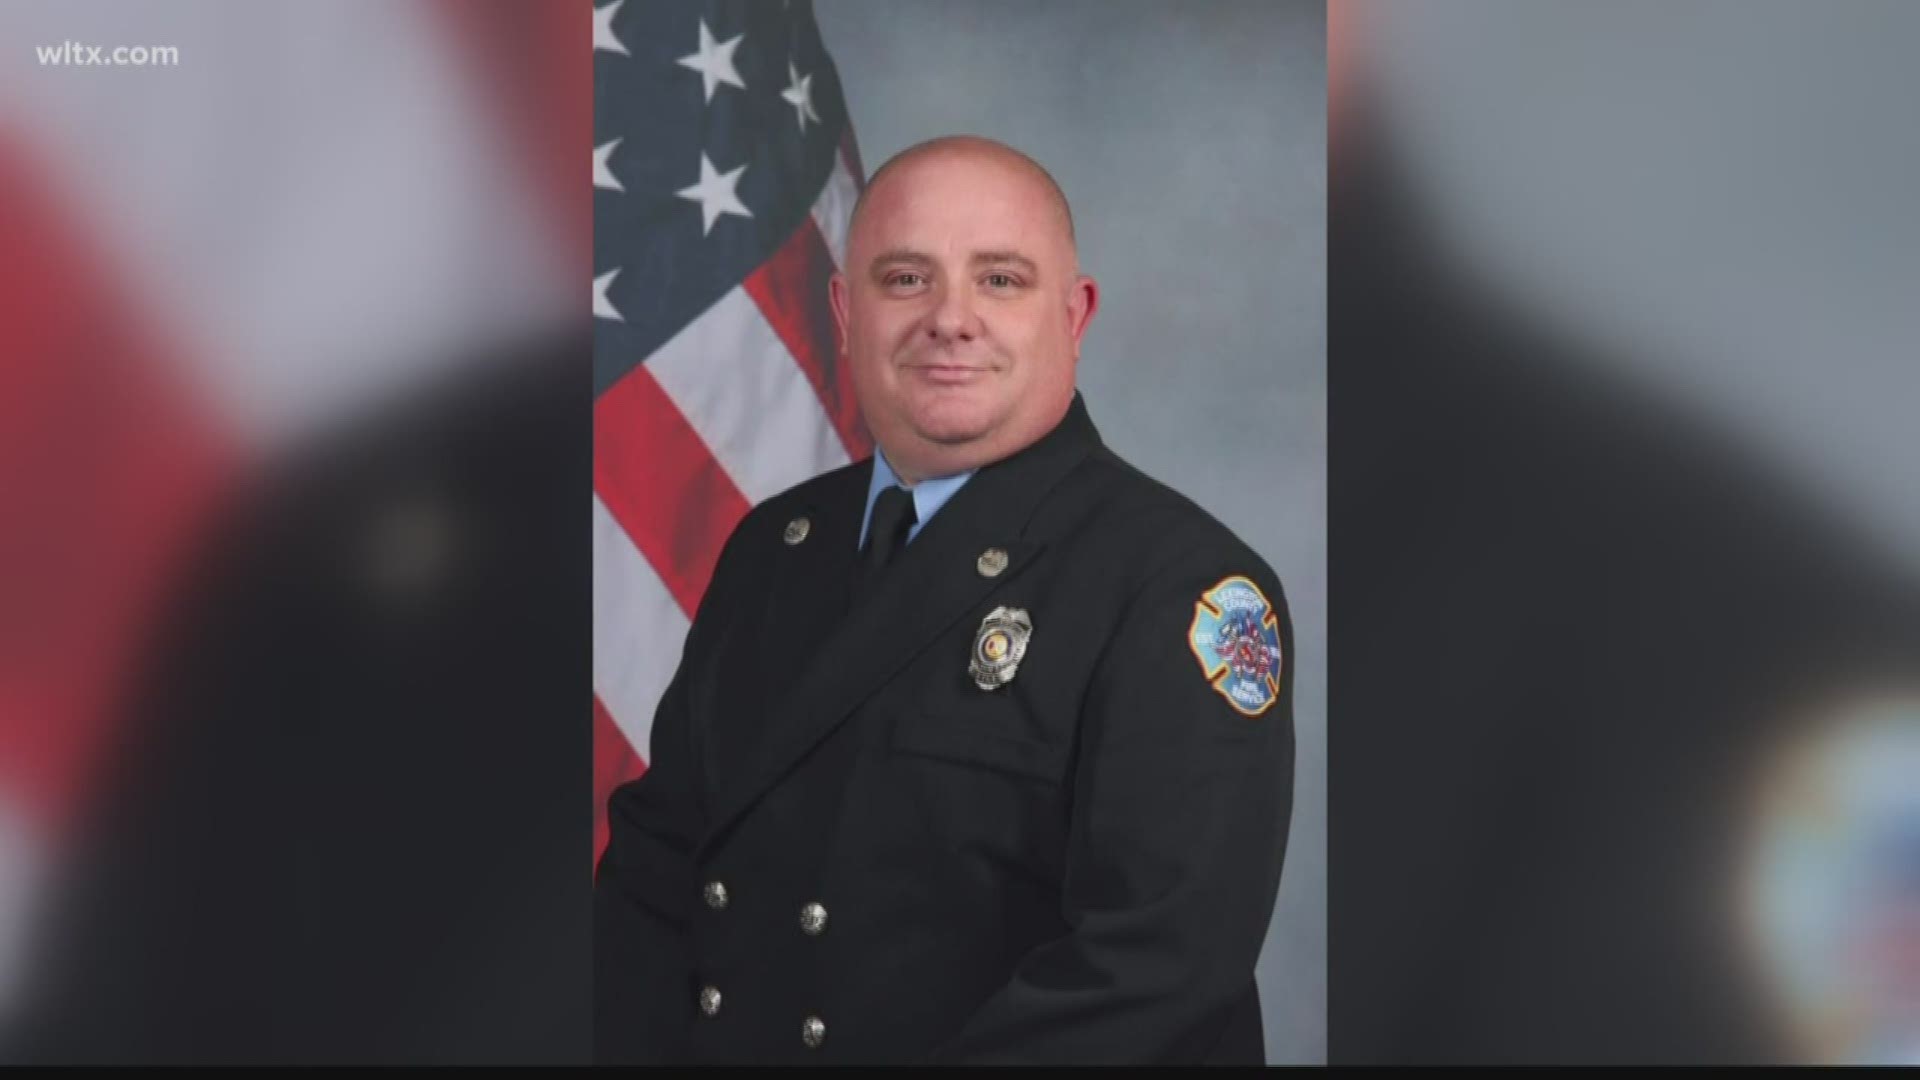 A blood drive will be held in Lexington to honor fallen firefighter Paul Quattlebaum.